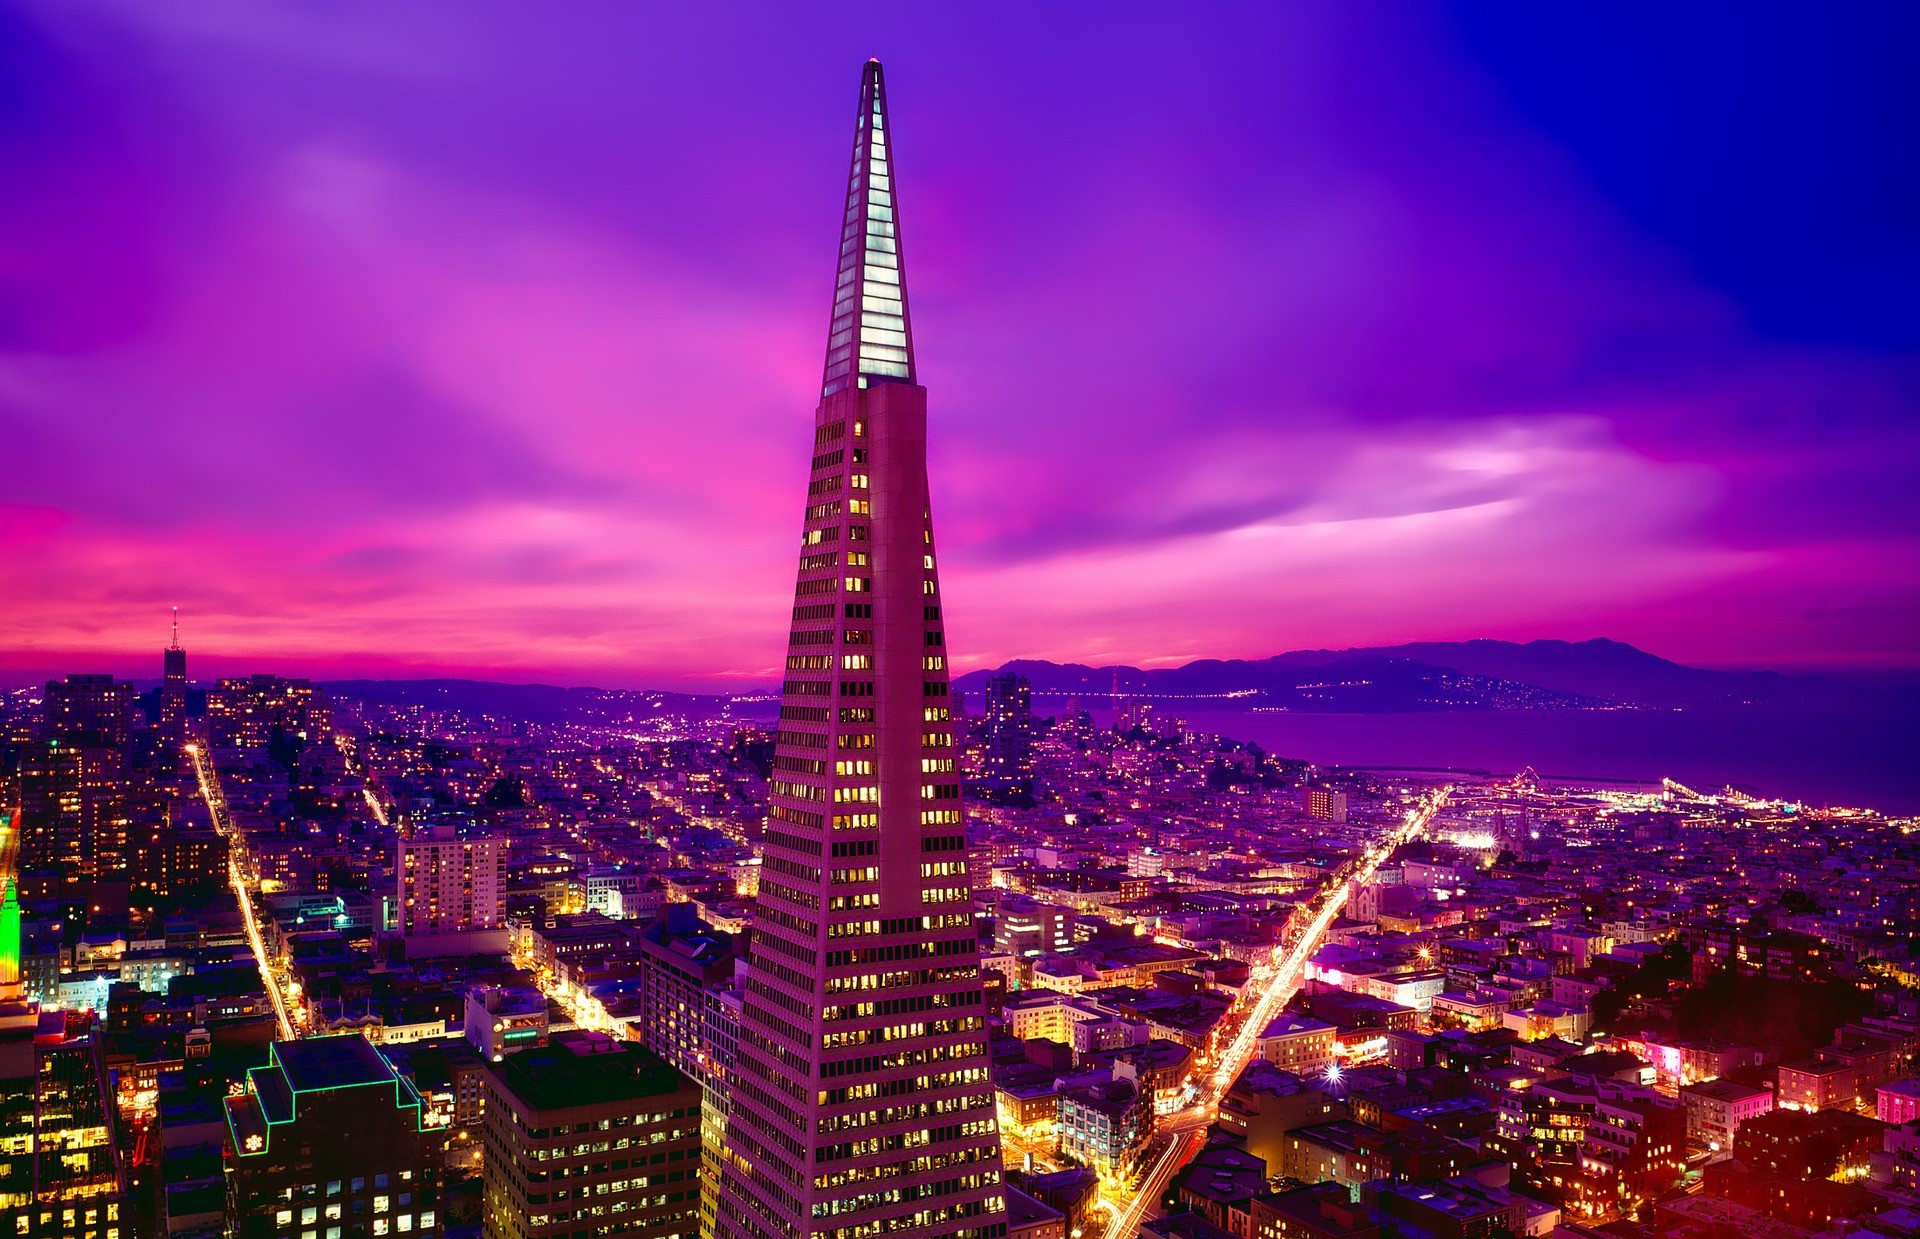 San Francisco's Transamerica Pyramid at Night